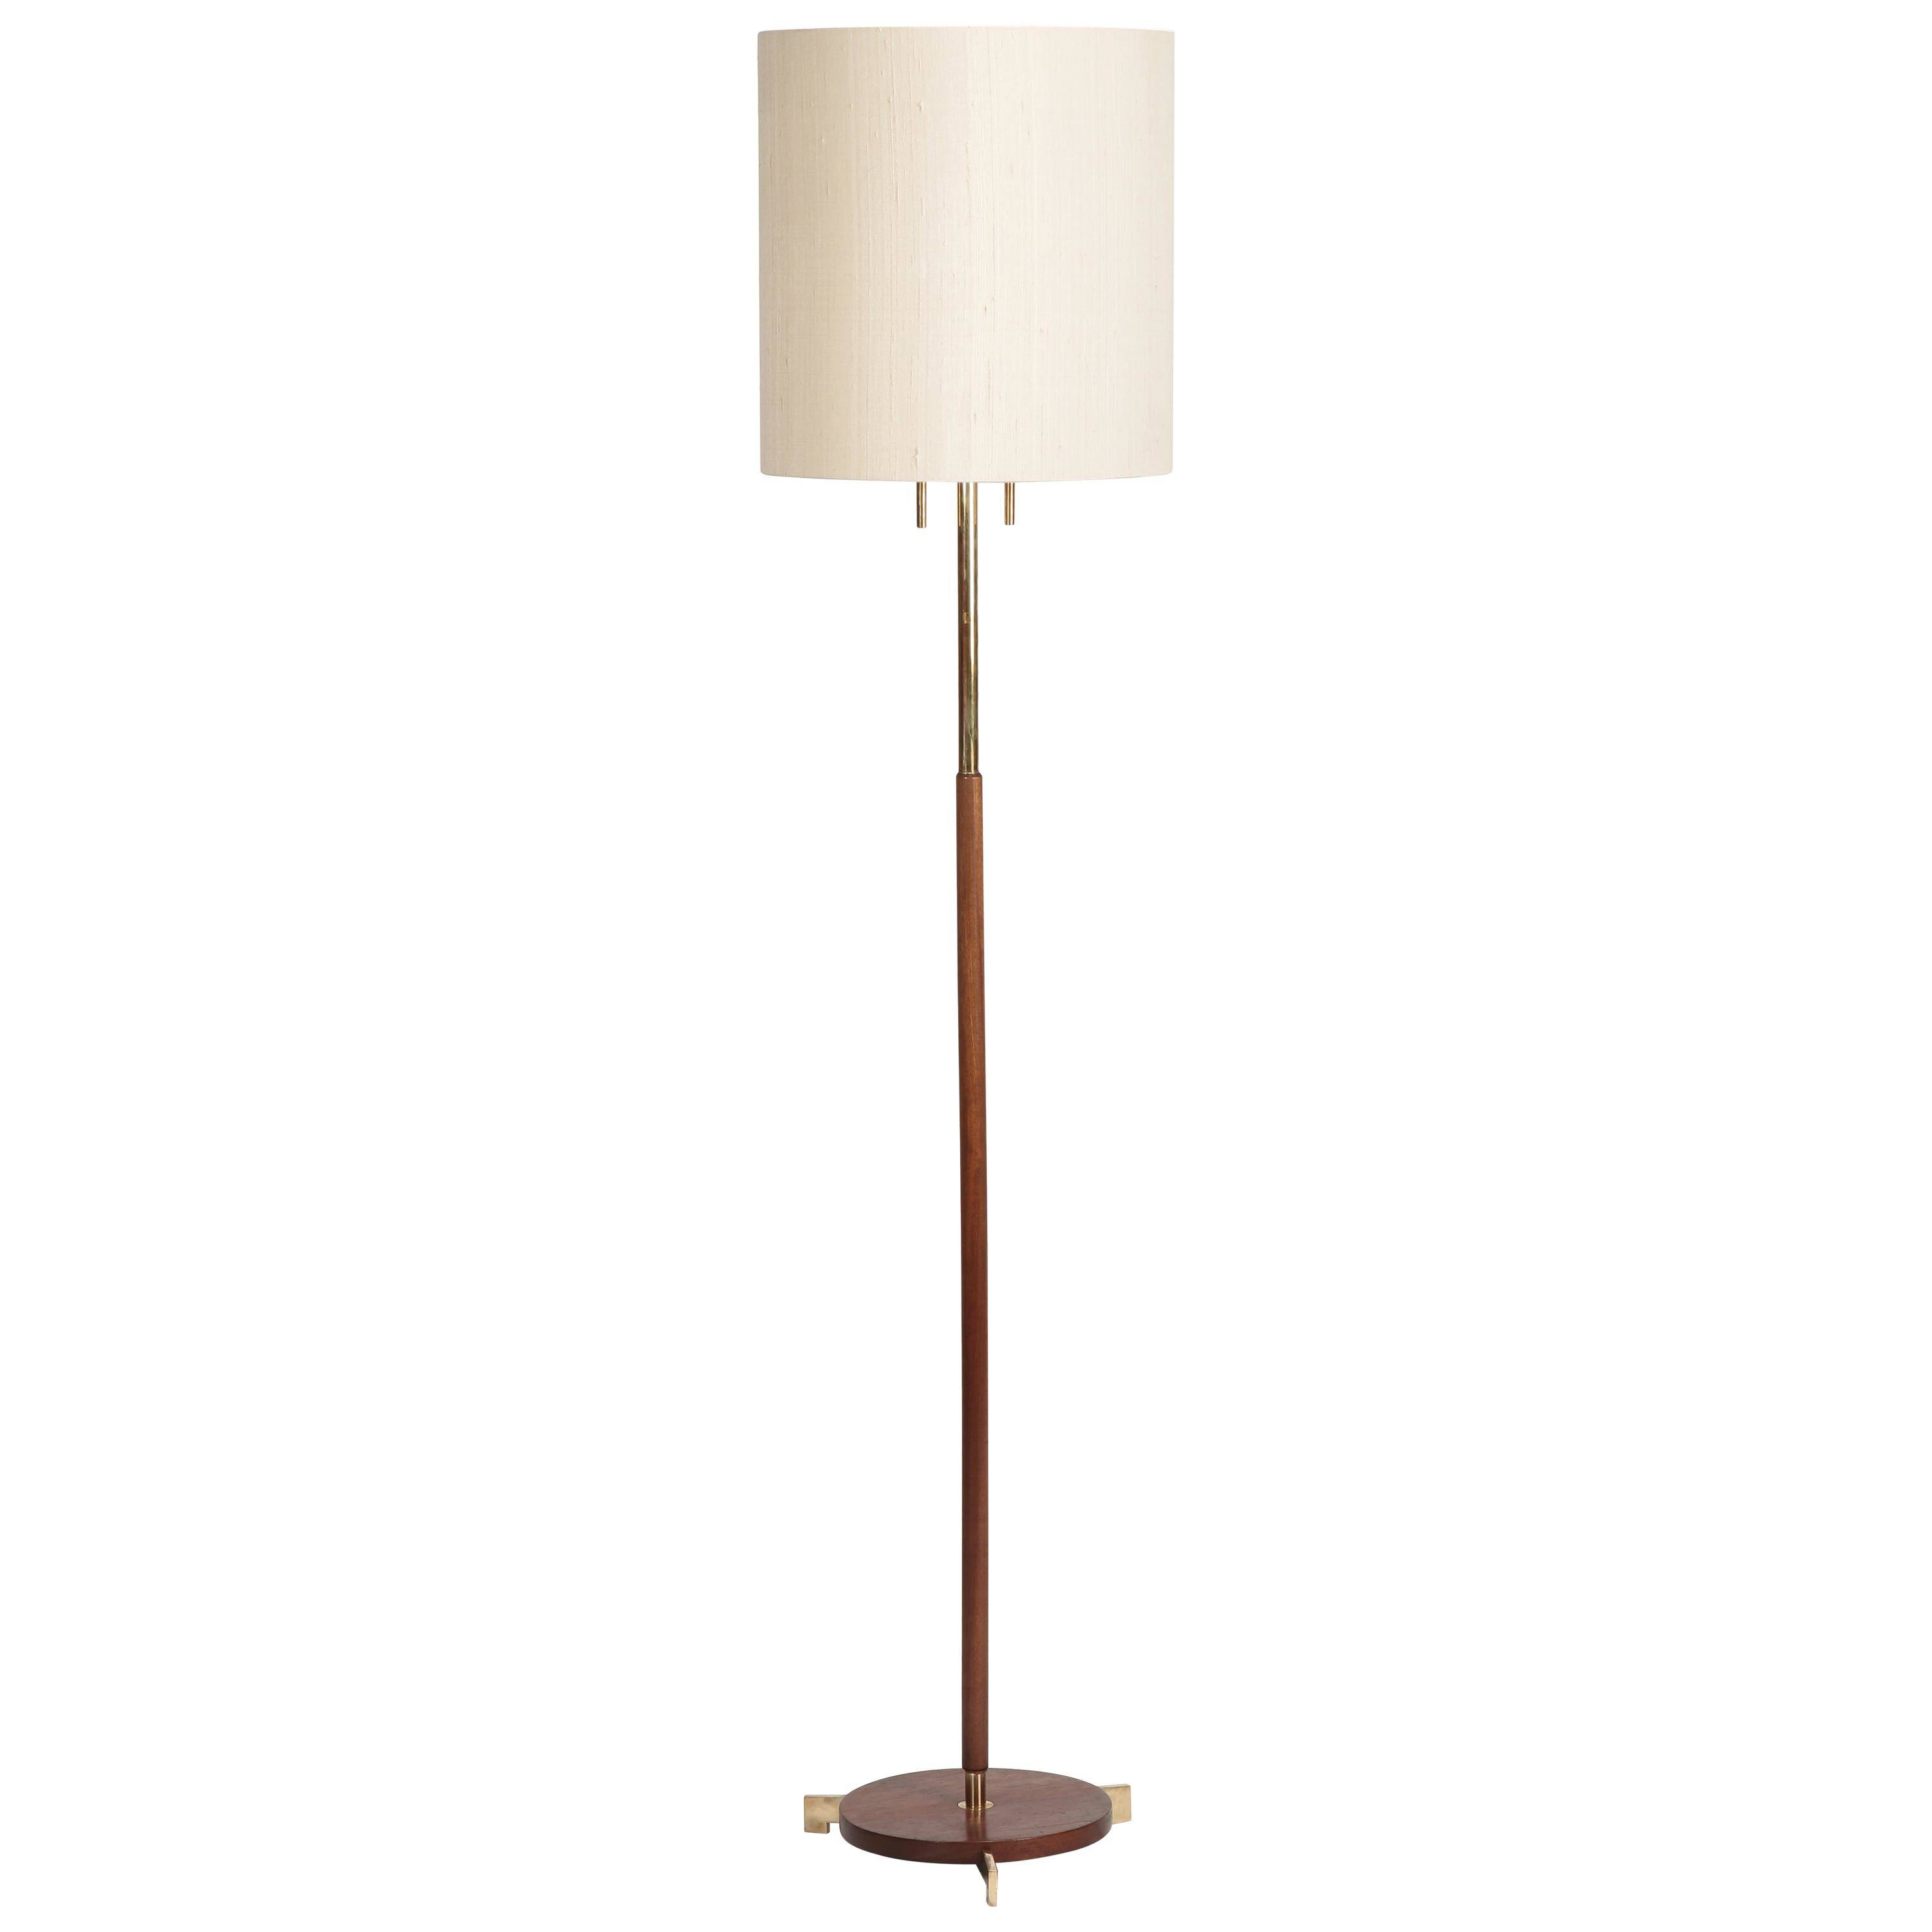 Beautiful Verve Design Floor Lamp Splendid Ideas Lighting inside size 3000 X 3000